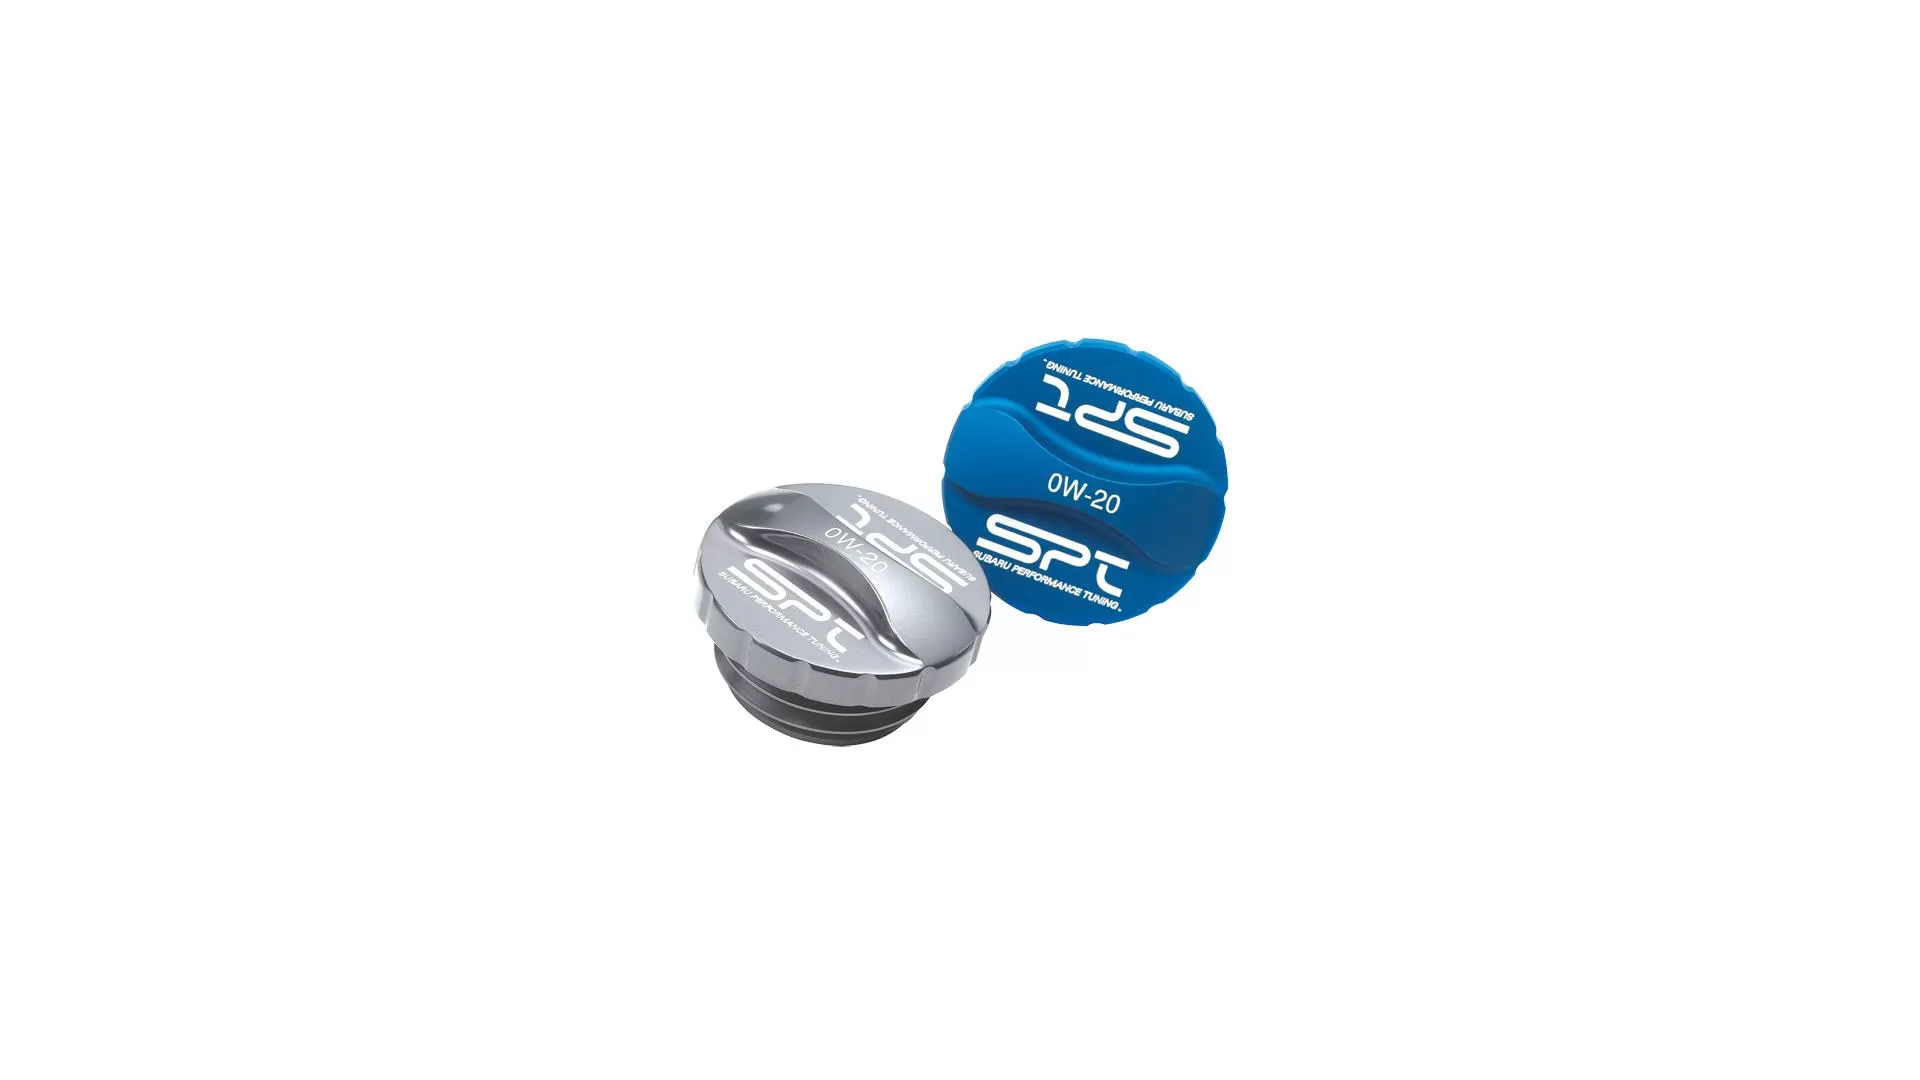 Genuine Subaru SPT Oil Filter Cap - Blue 0W-20 Subaru Crosstrek 13-15 - SOA3881250